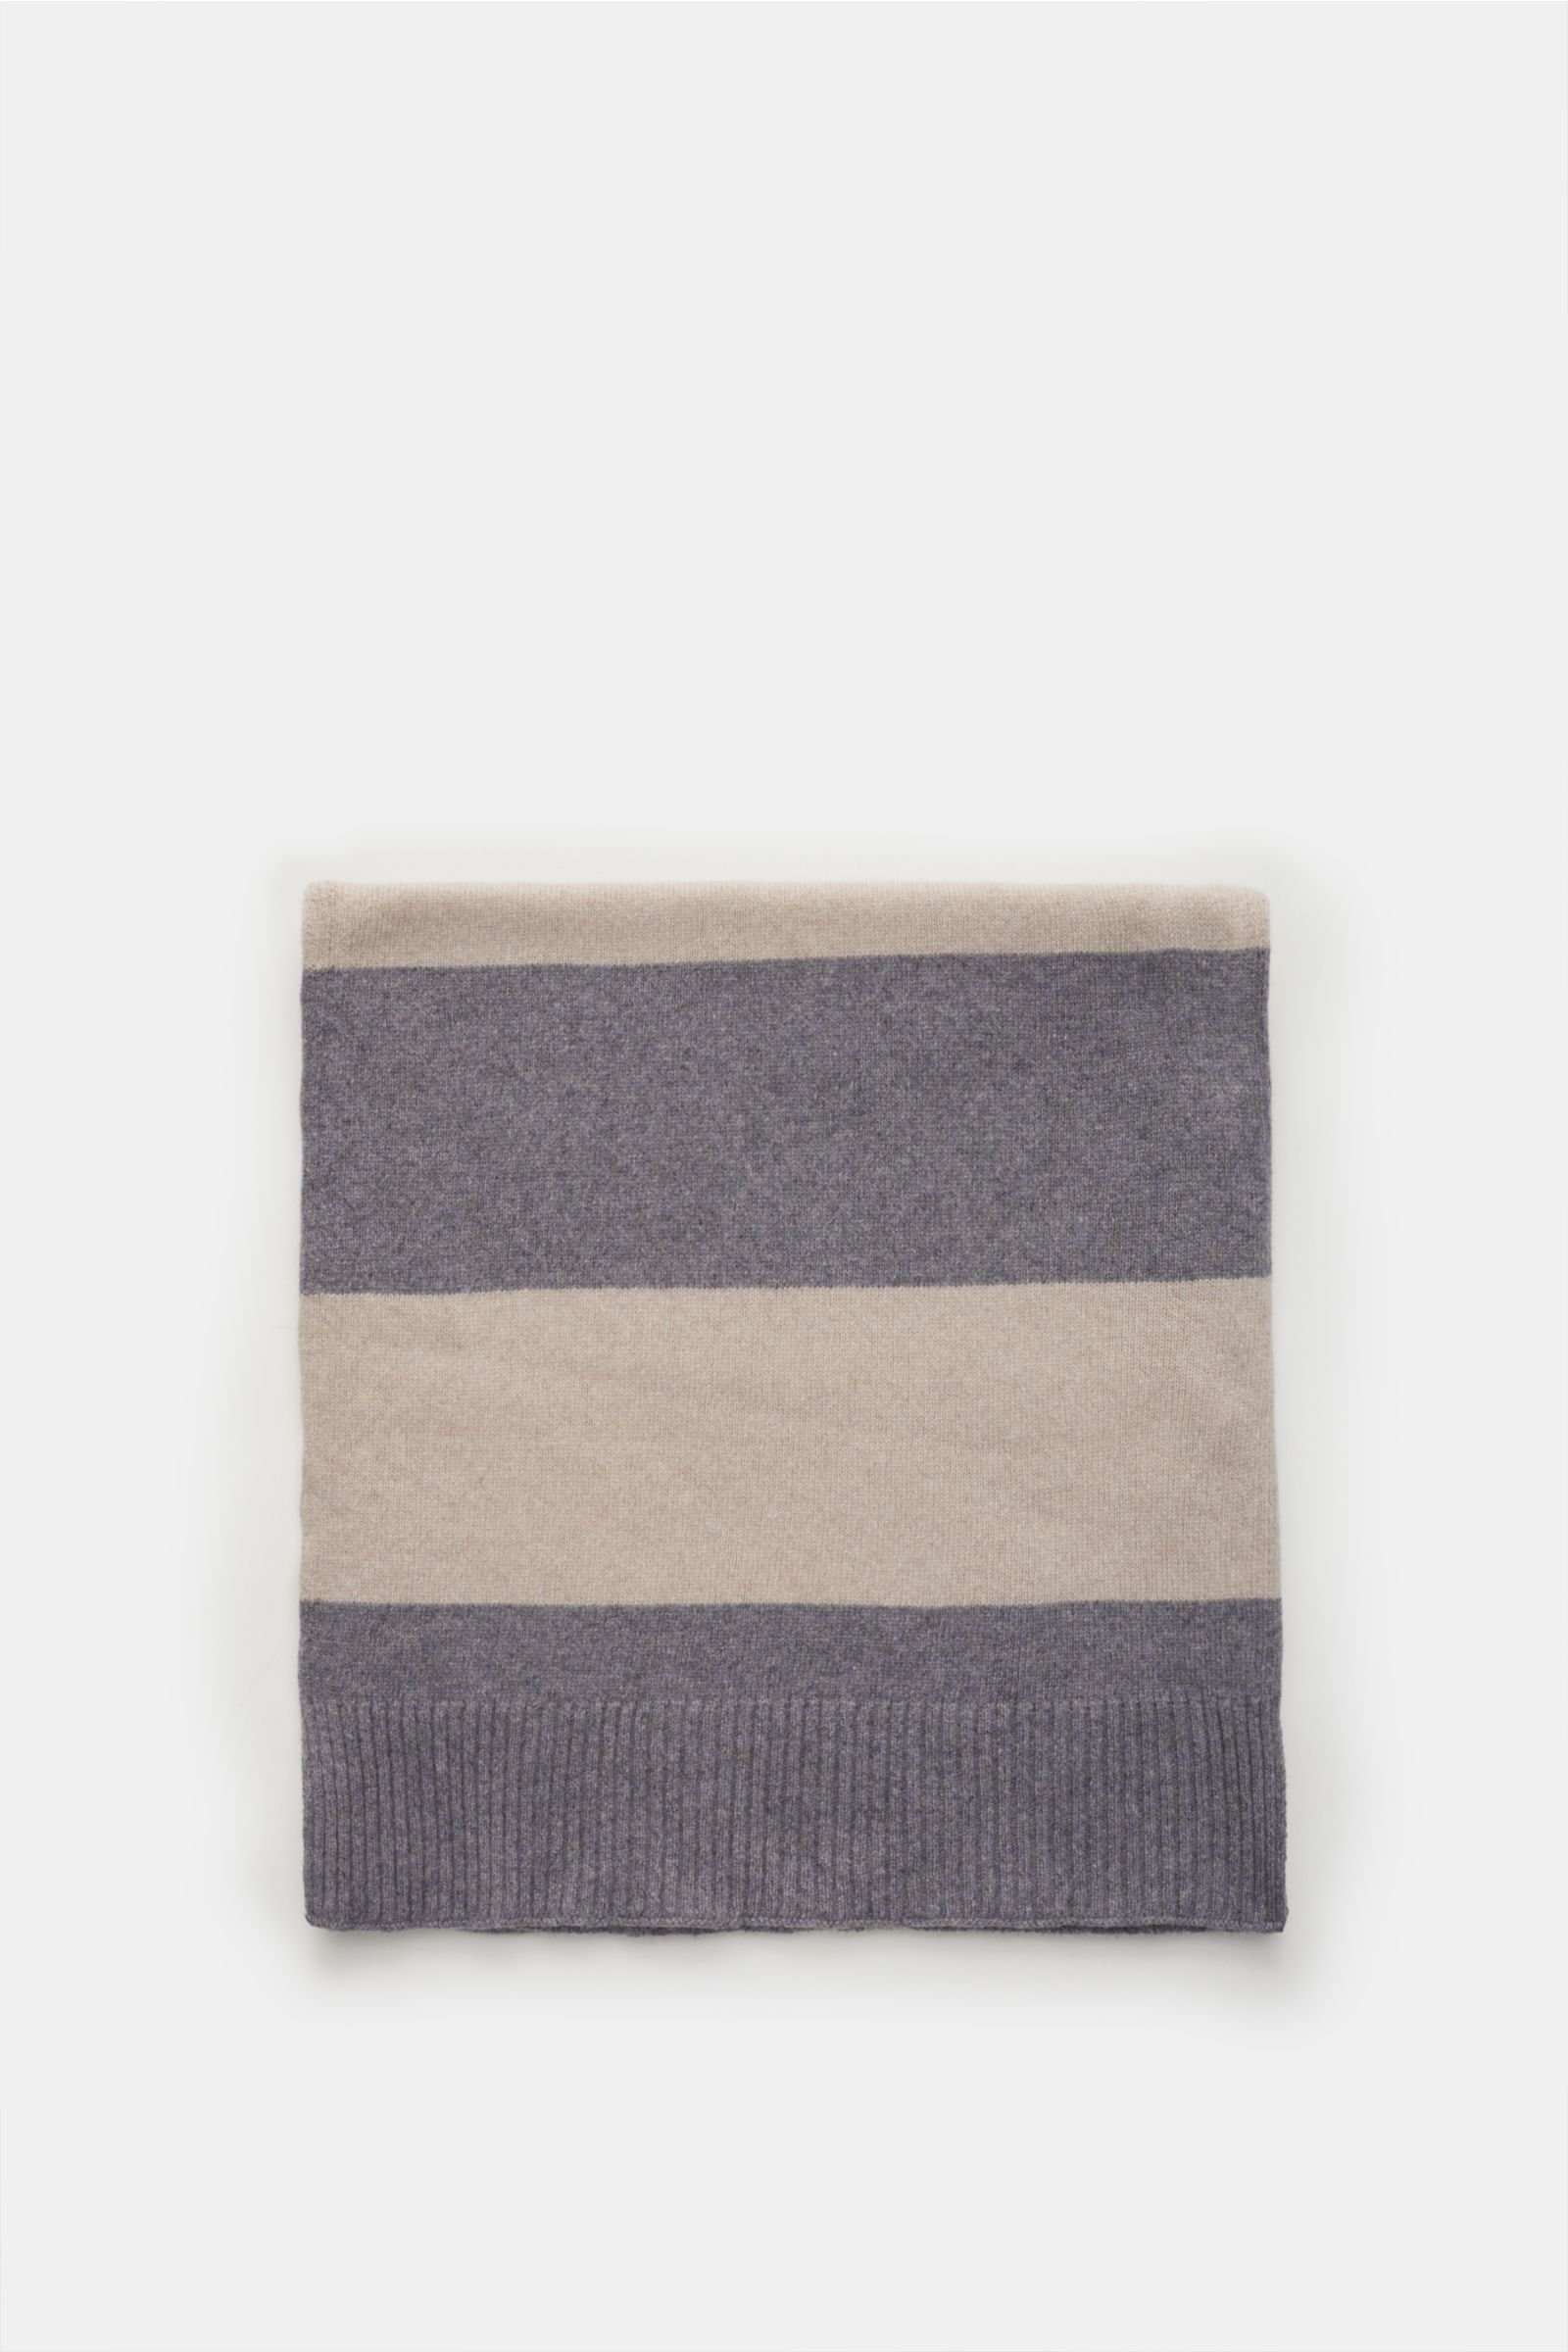 Cashmere scarf grey/beige striped